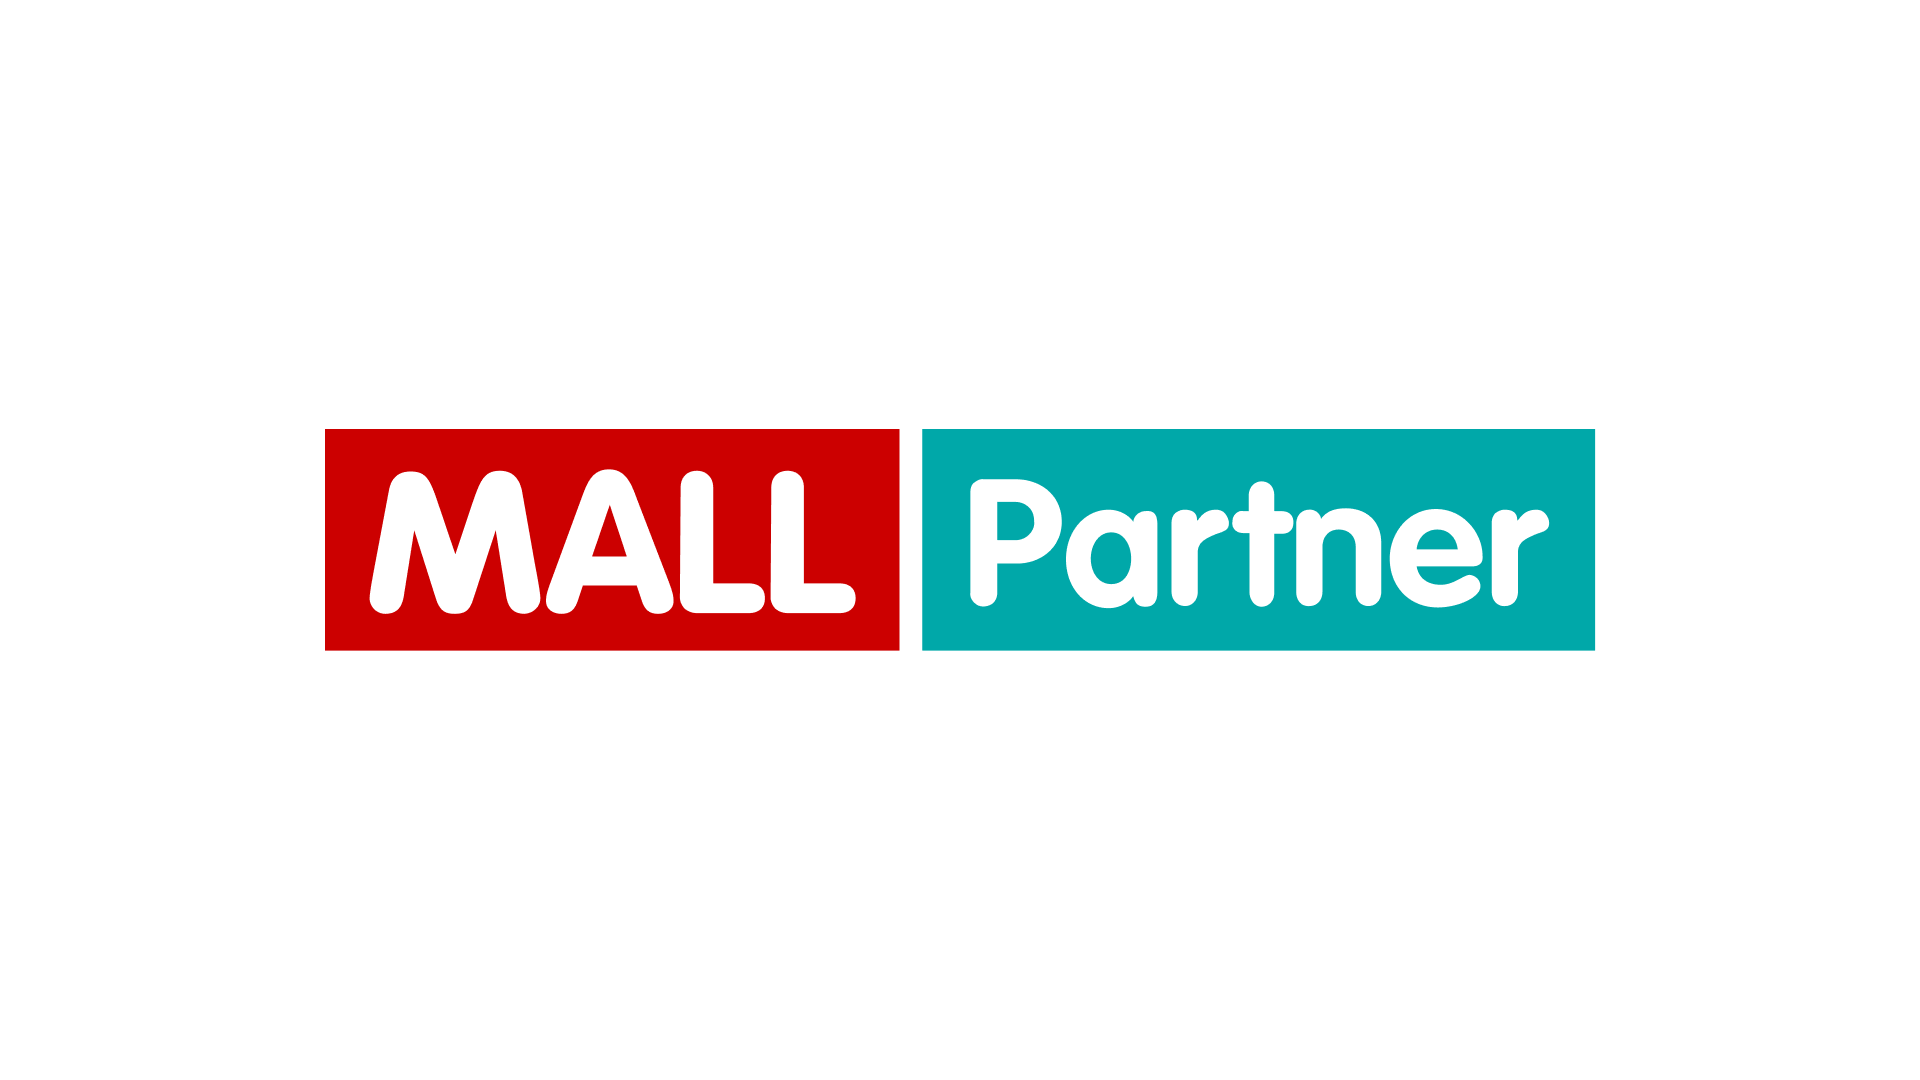 marketplaces_mall-partner_1920x1080